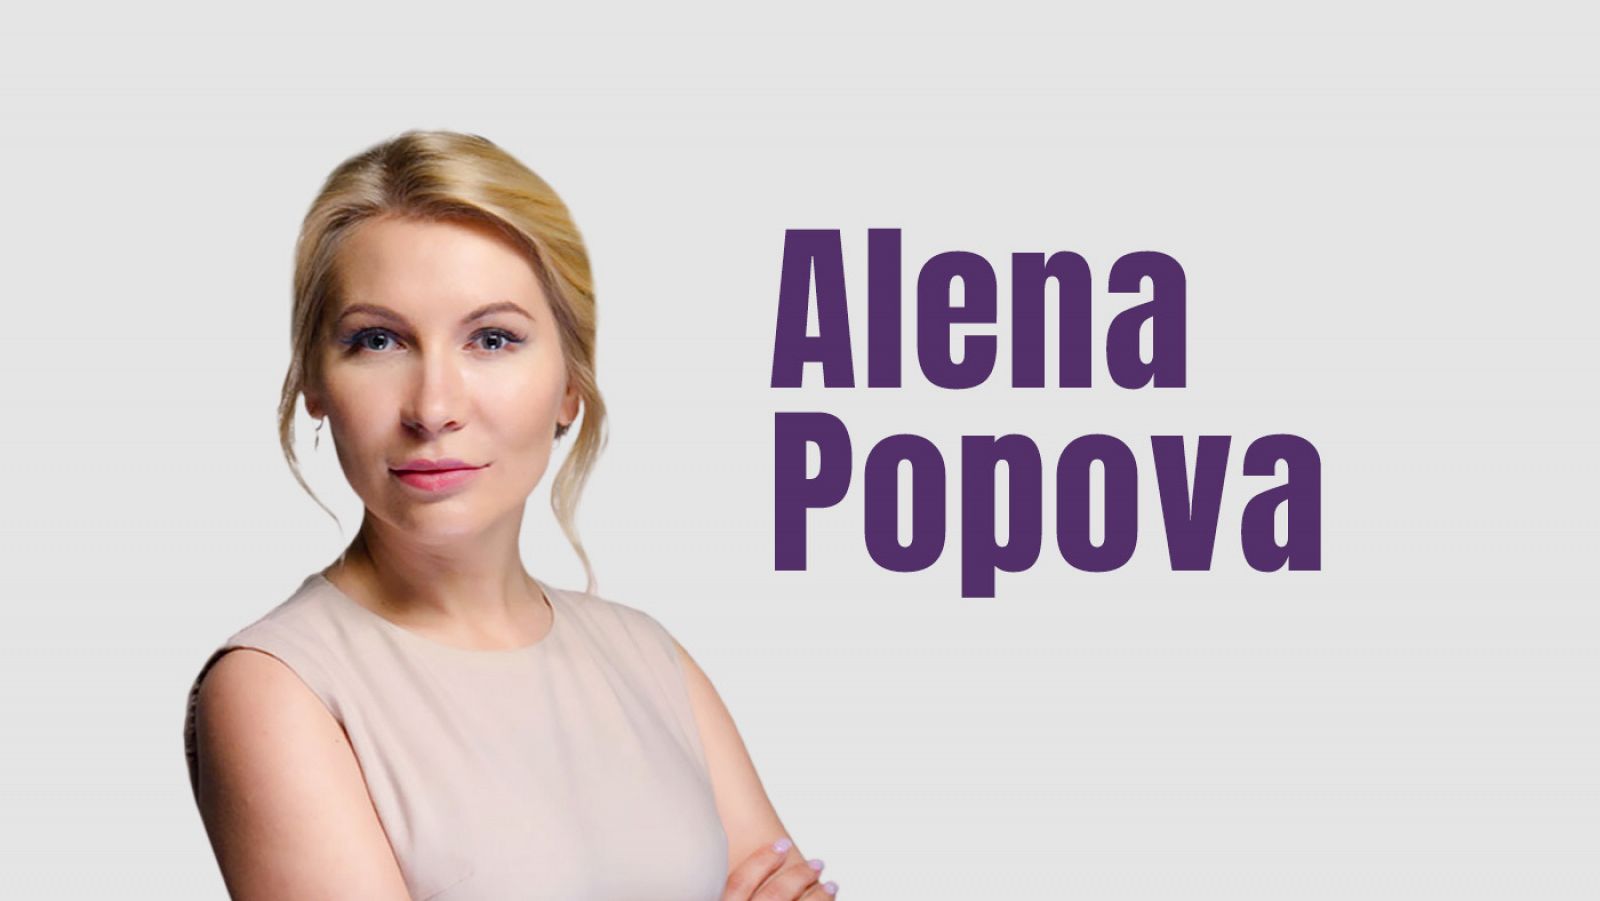 Alena Popova